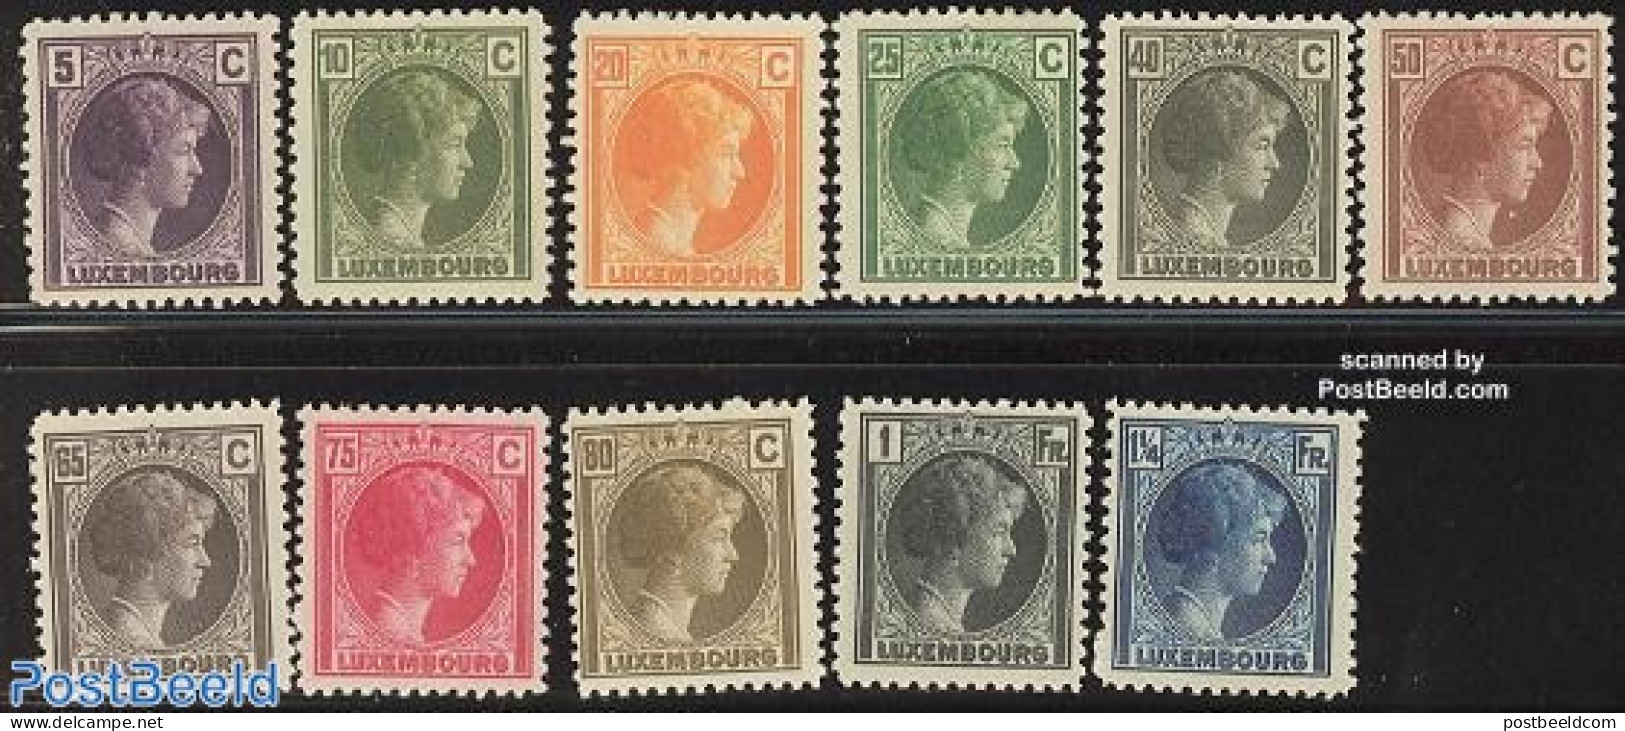 Luxemburg 1926 Definitives 11v, Mint NH - Ungebraucht